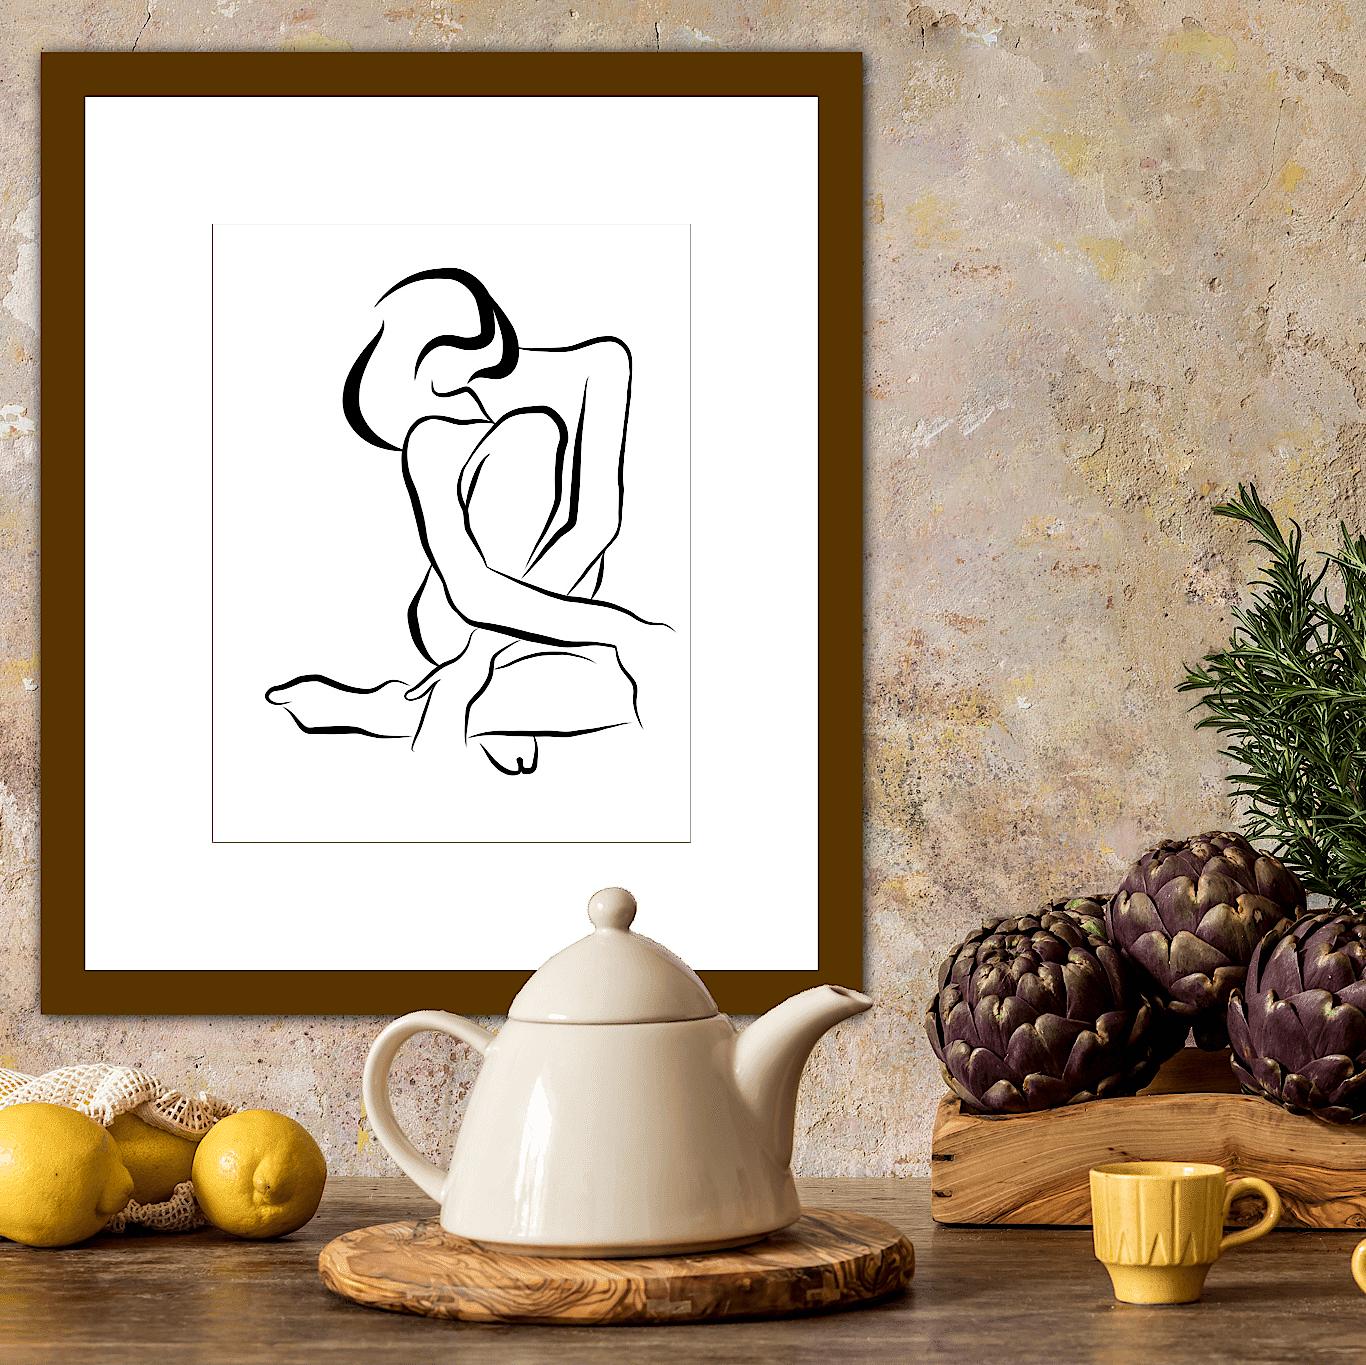 Haiku #19 - Digital Vector Drawing B&W Seated Female Nude Woman Figure - Contemporary Print by Michael Binkley